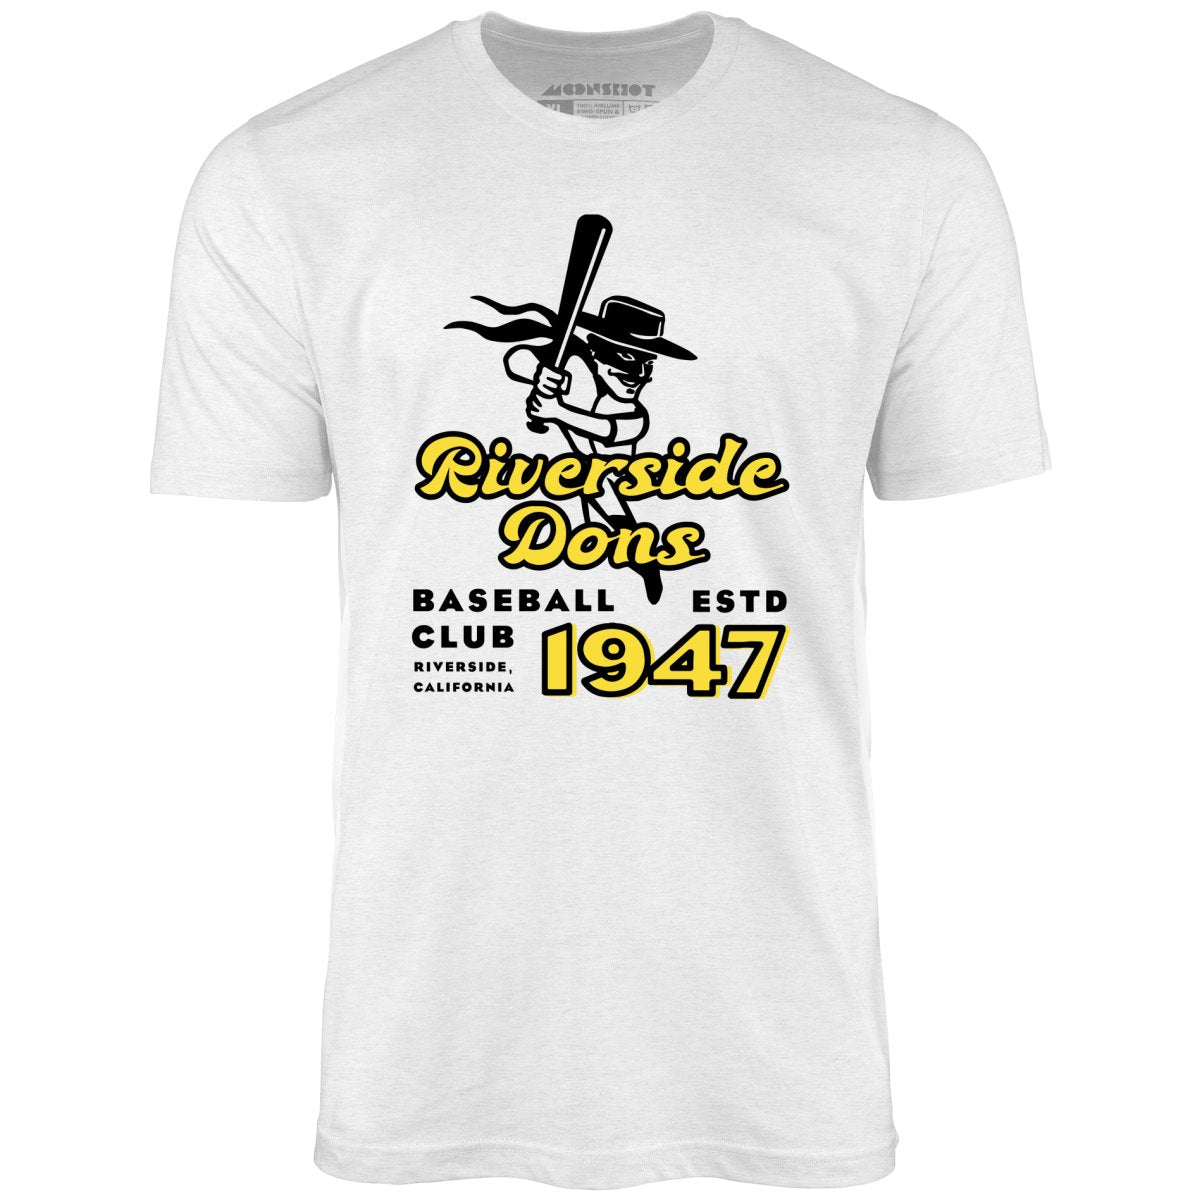 Riverside Dons - California - Vintage Defunct Baseball Teams - Unisex T-Shirt